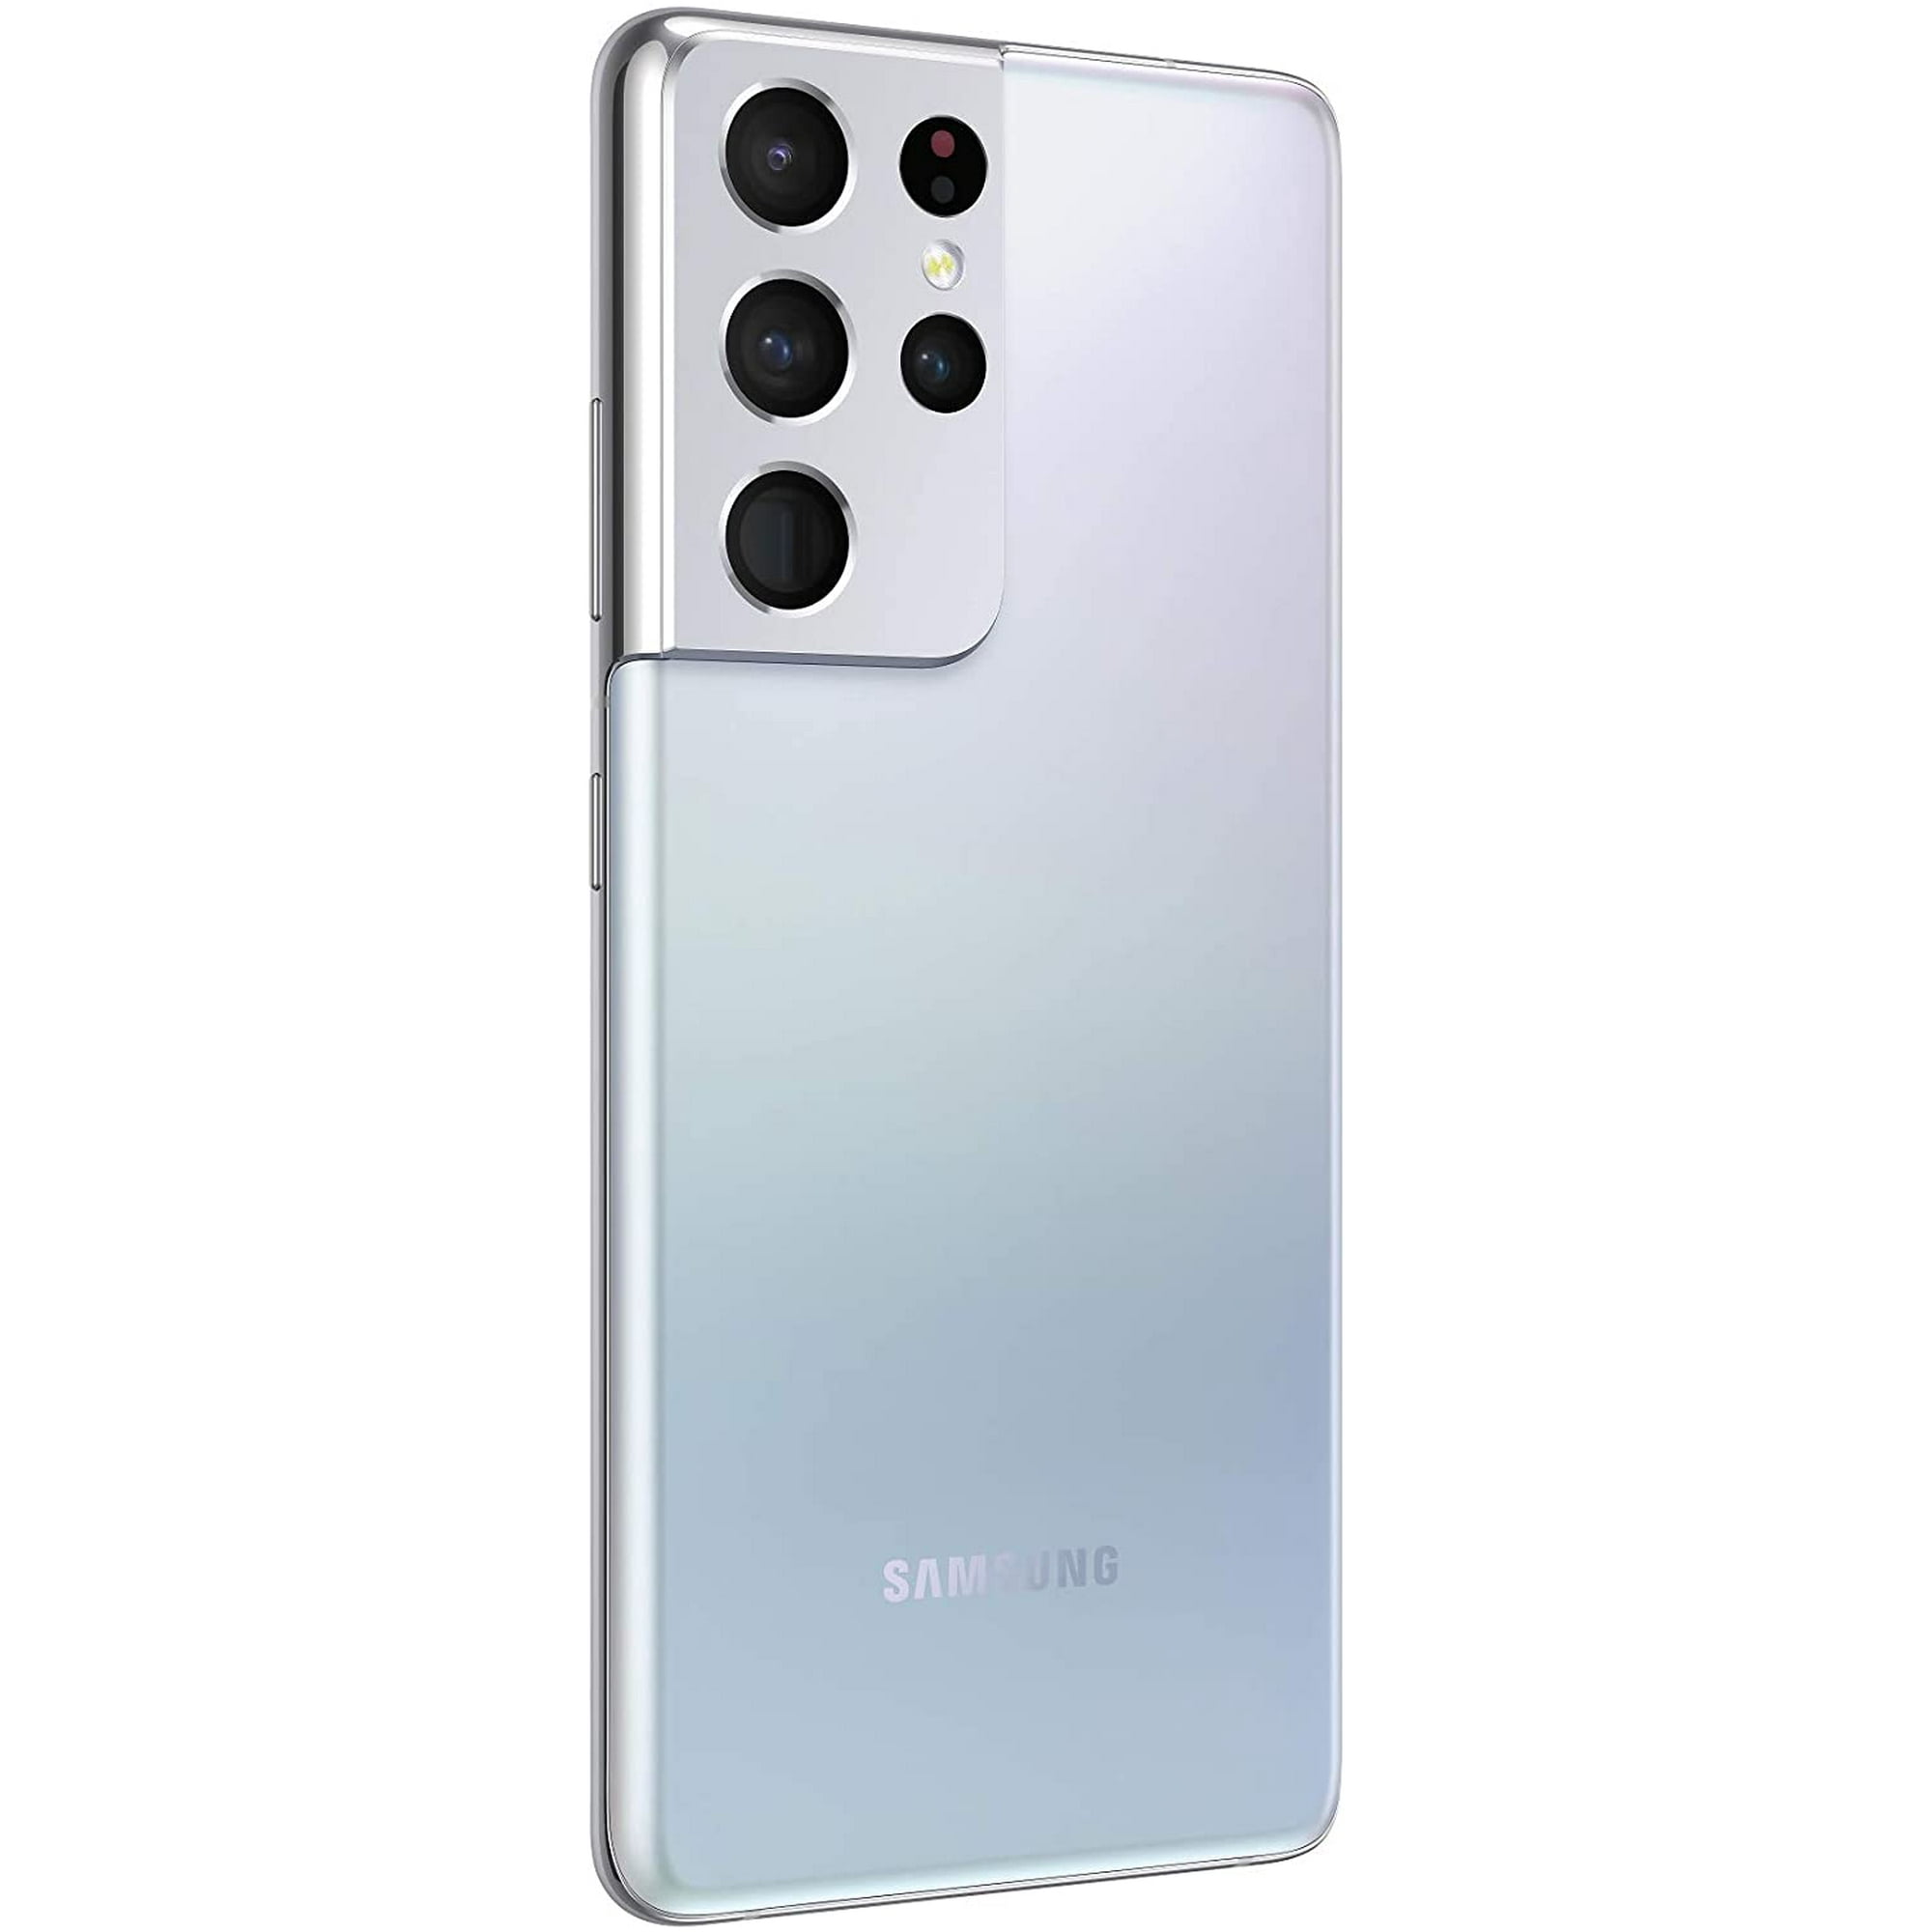 Samsung Galaxy S21 Ultra 5G 256GB Smartphone | Brand New | Phantom